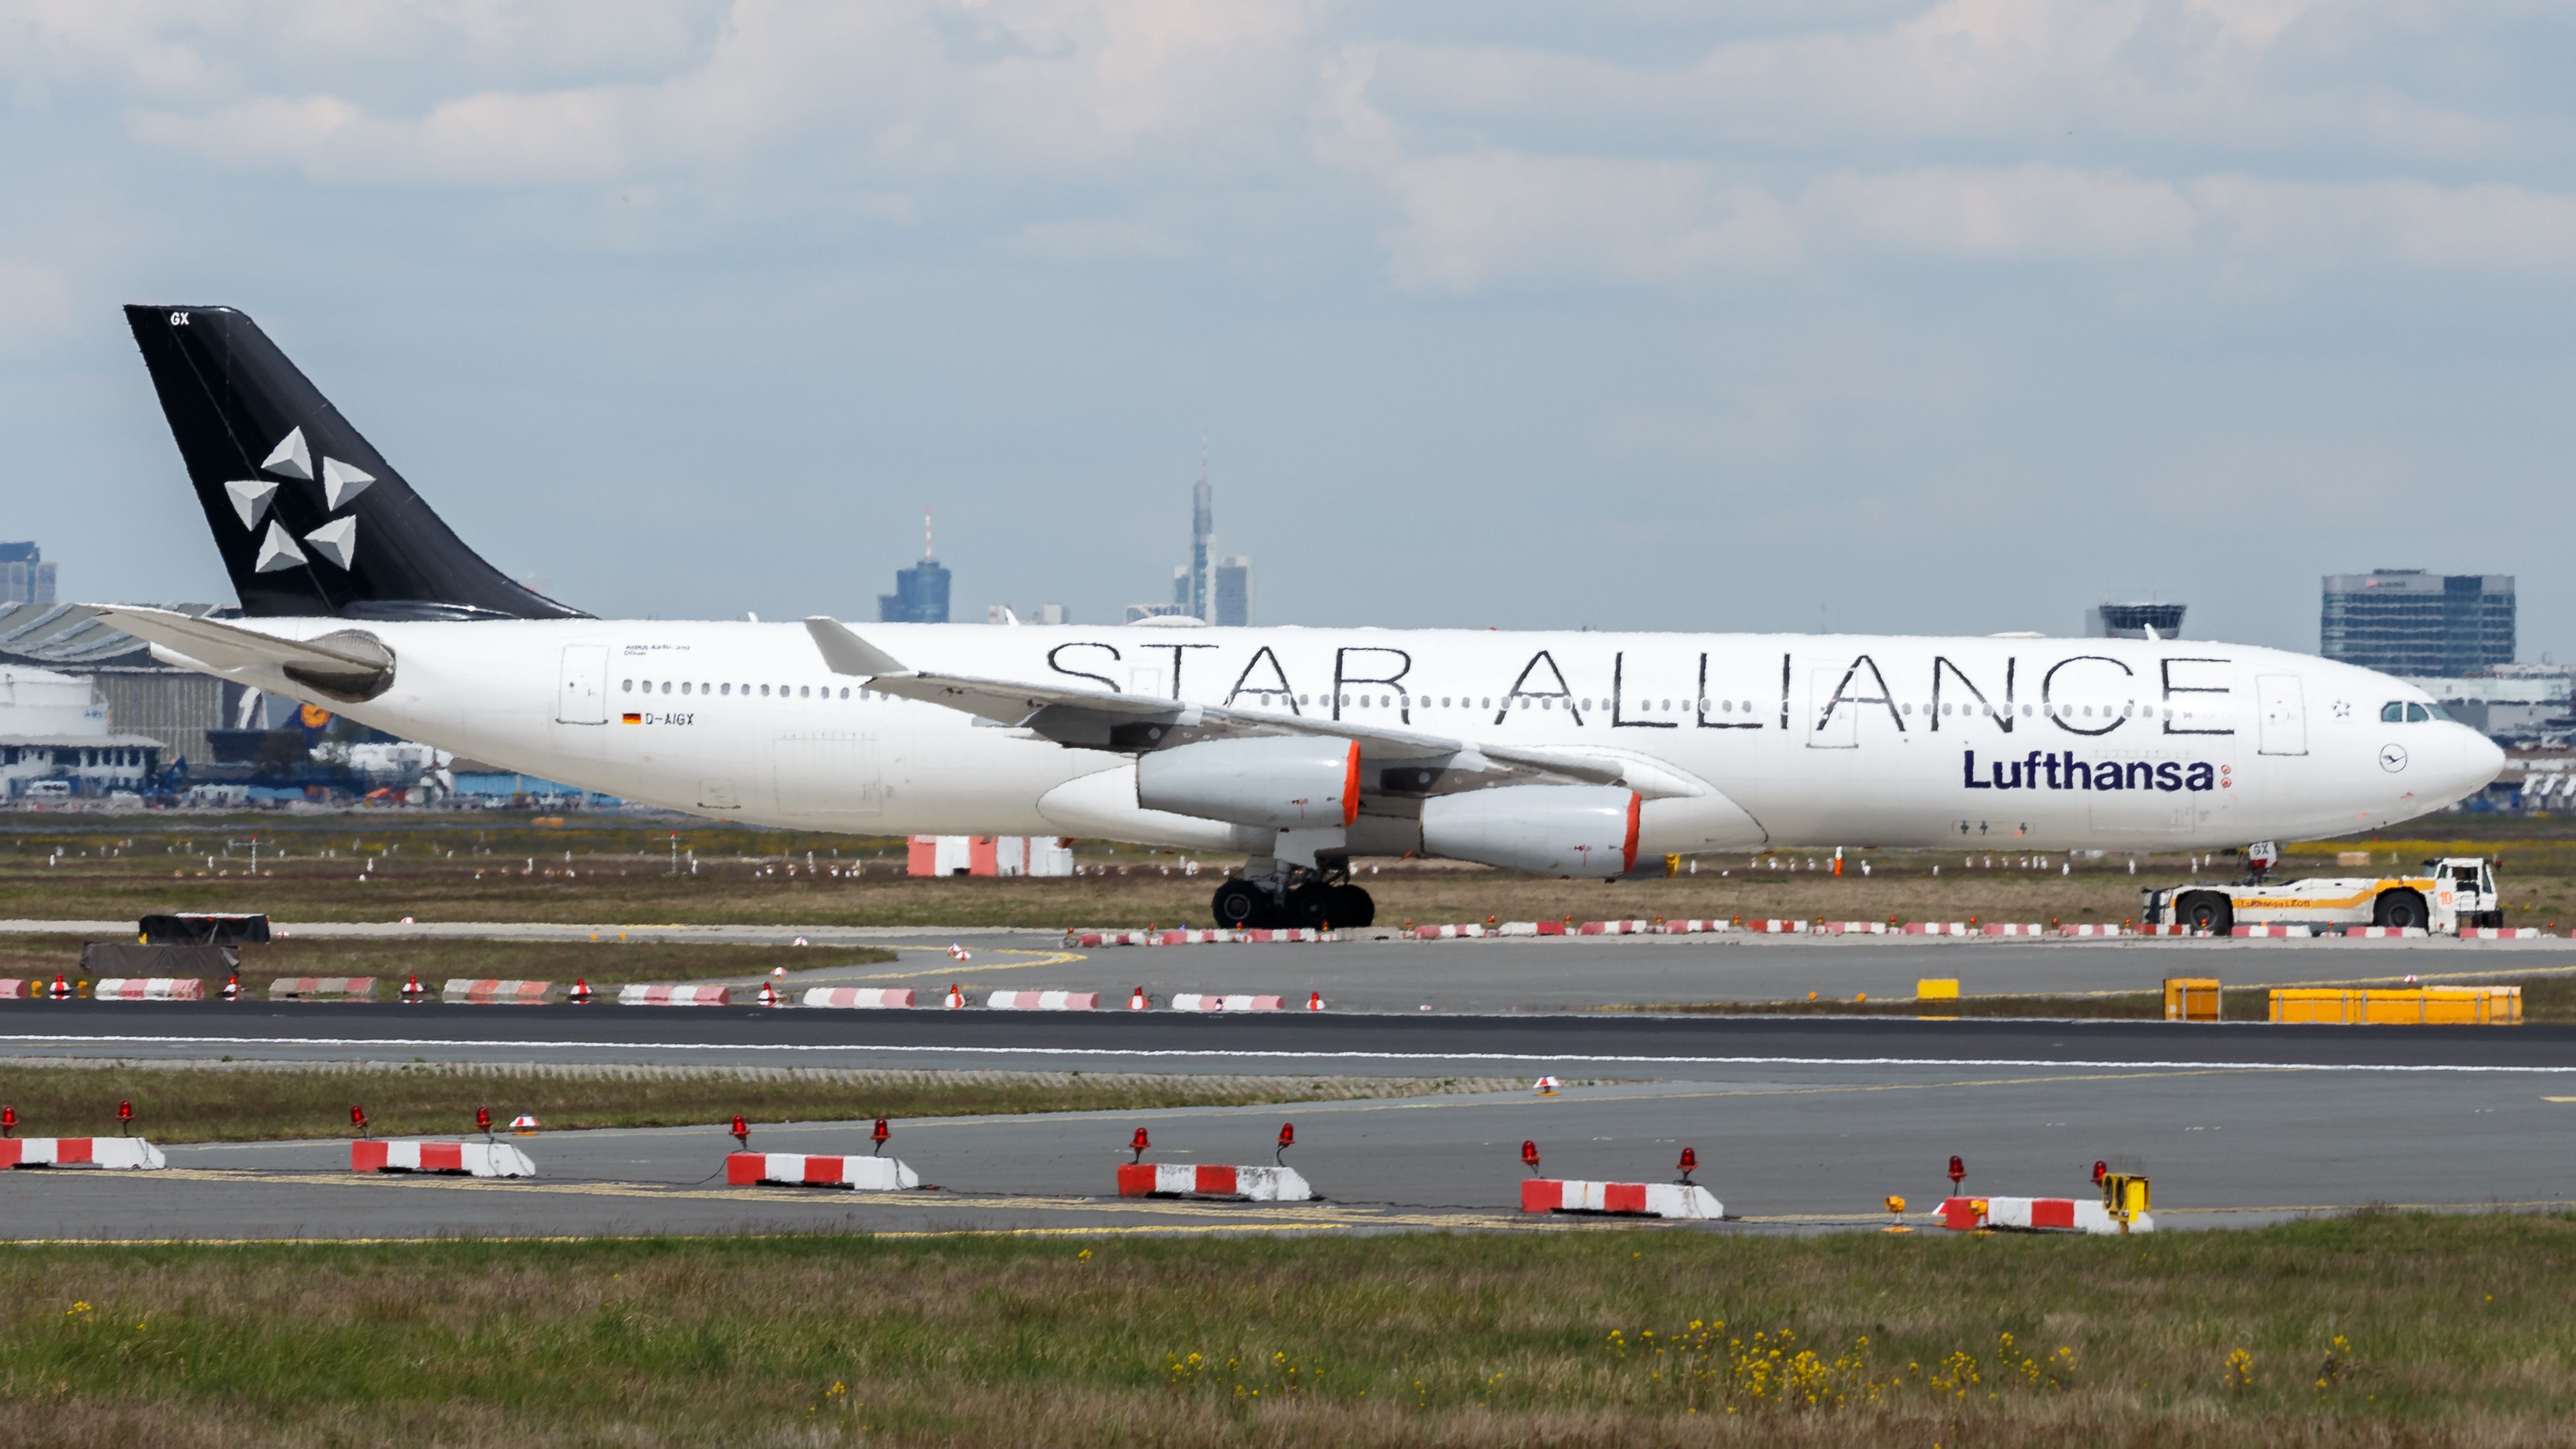 A Lufthansa Airbus A340-300 in Star Alliance liveryon an airport apron.